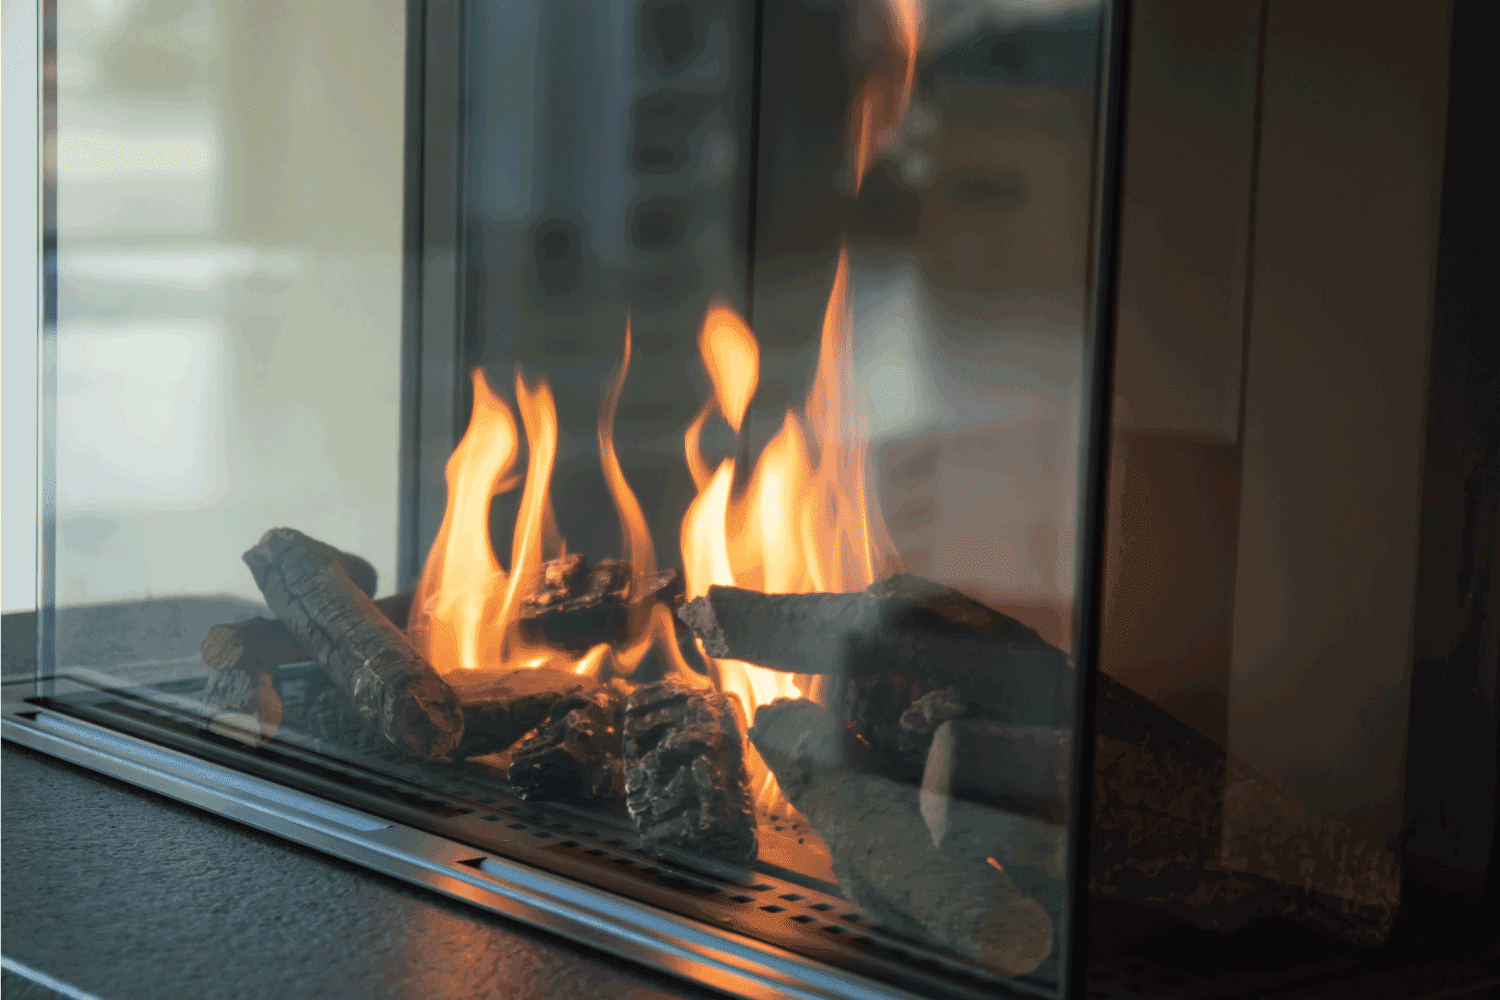 A fire burns in a glass fireplace, radiates heat